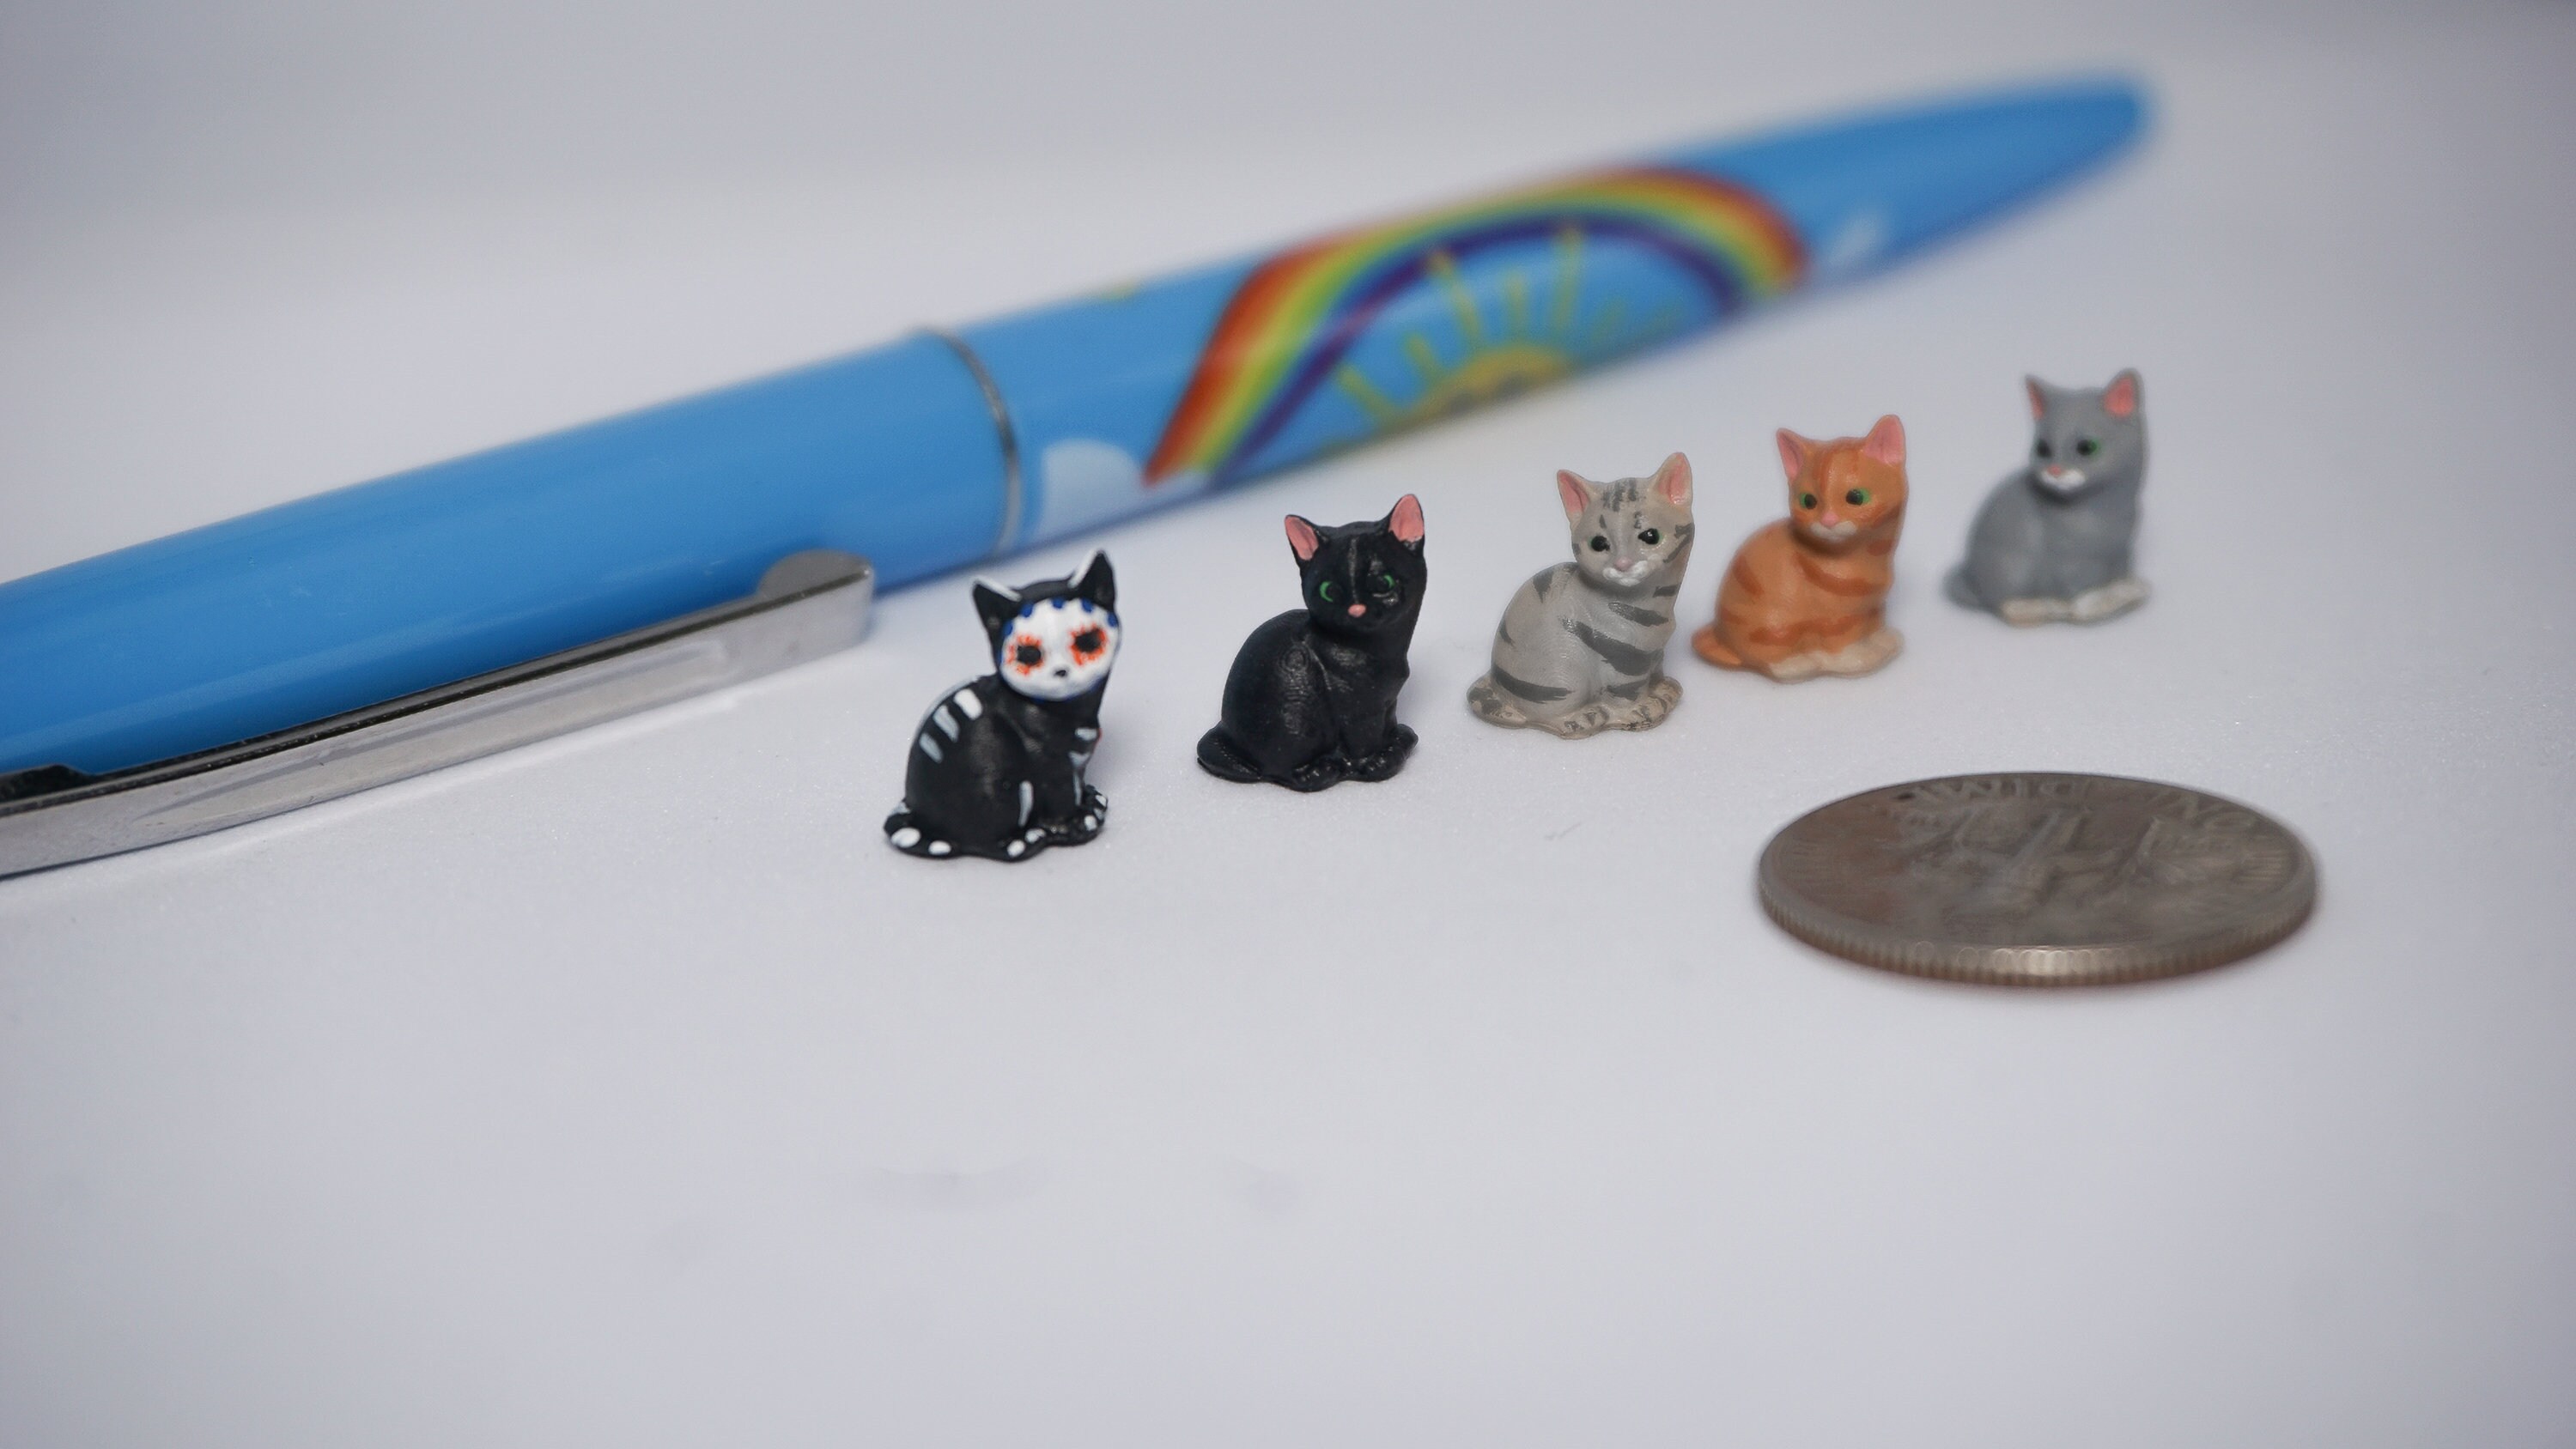 NEW Mini Sitting Tuxedo Kitten Miniature 1:24 G Scale Hand Painted Resin 